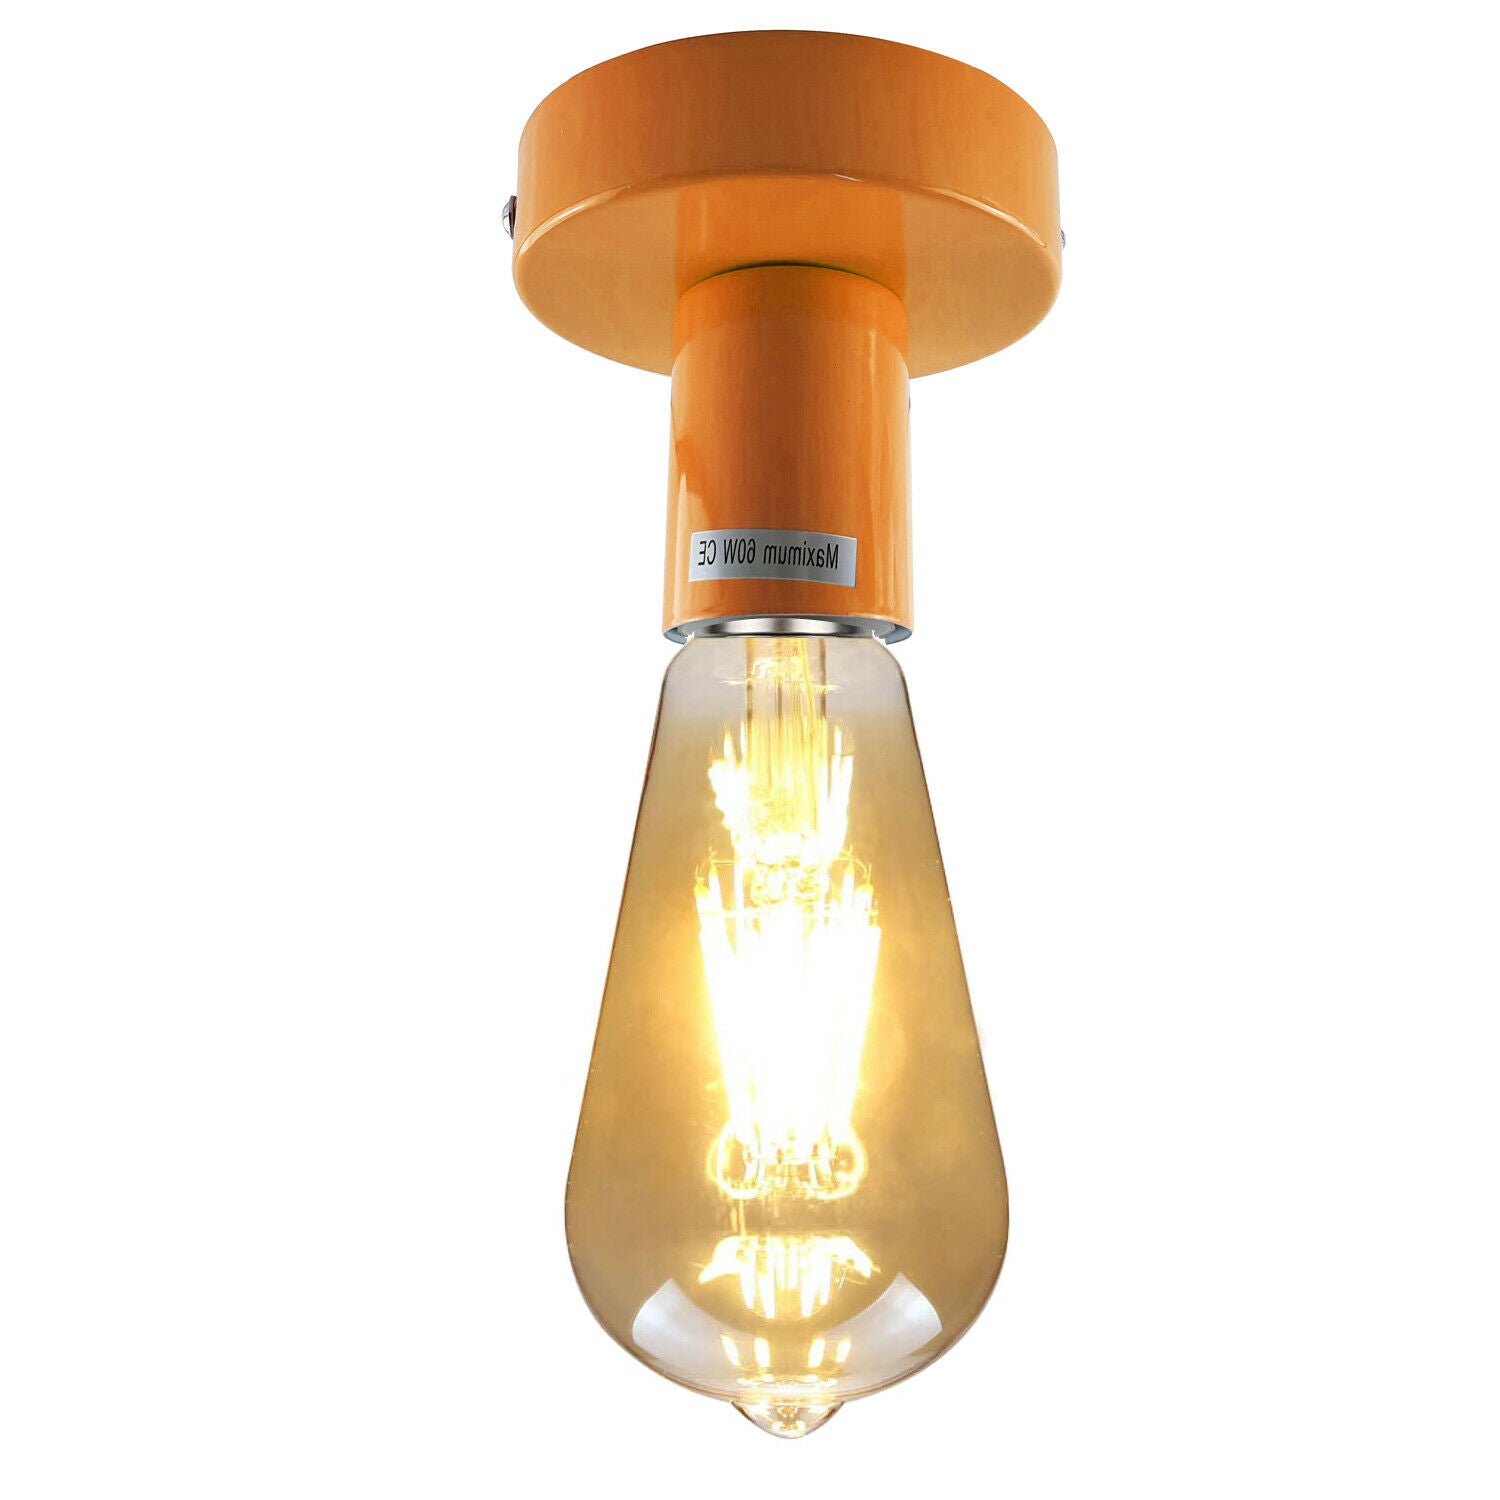 LEDSone industrial vintage Orange Flush Mount Ceiling Light Fitting~1687 - LEDSone UK Ltd